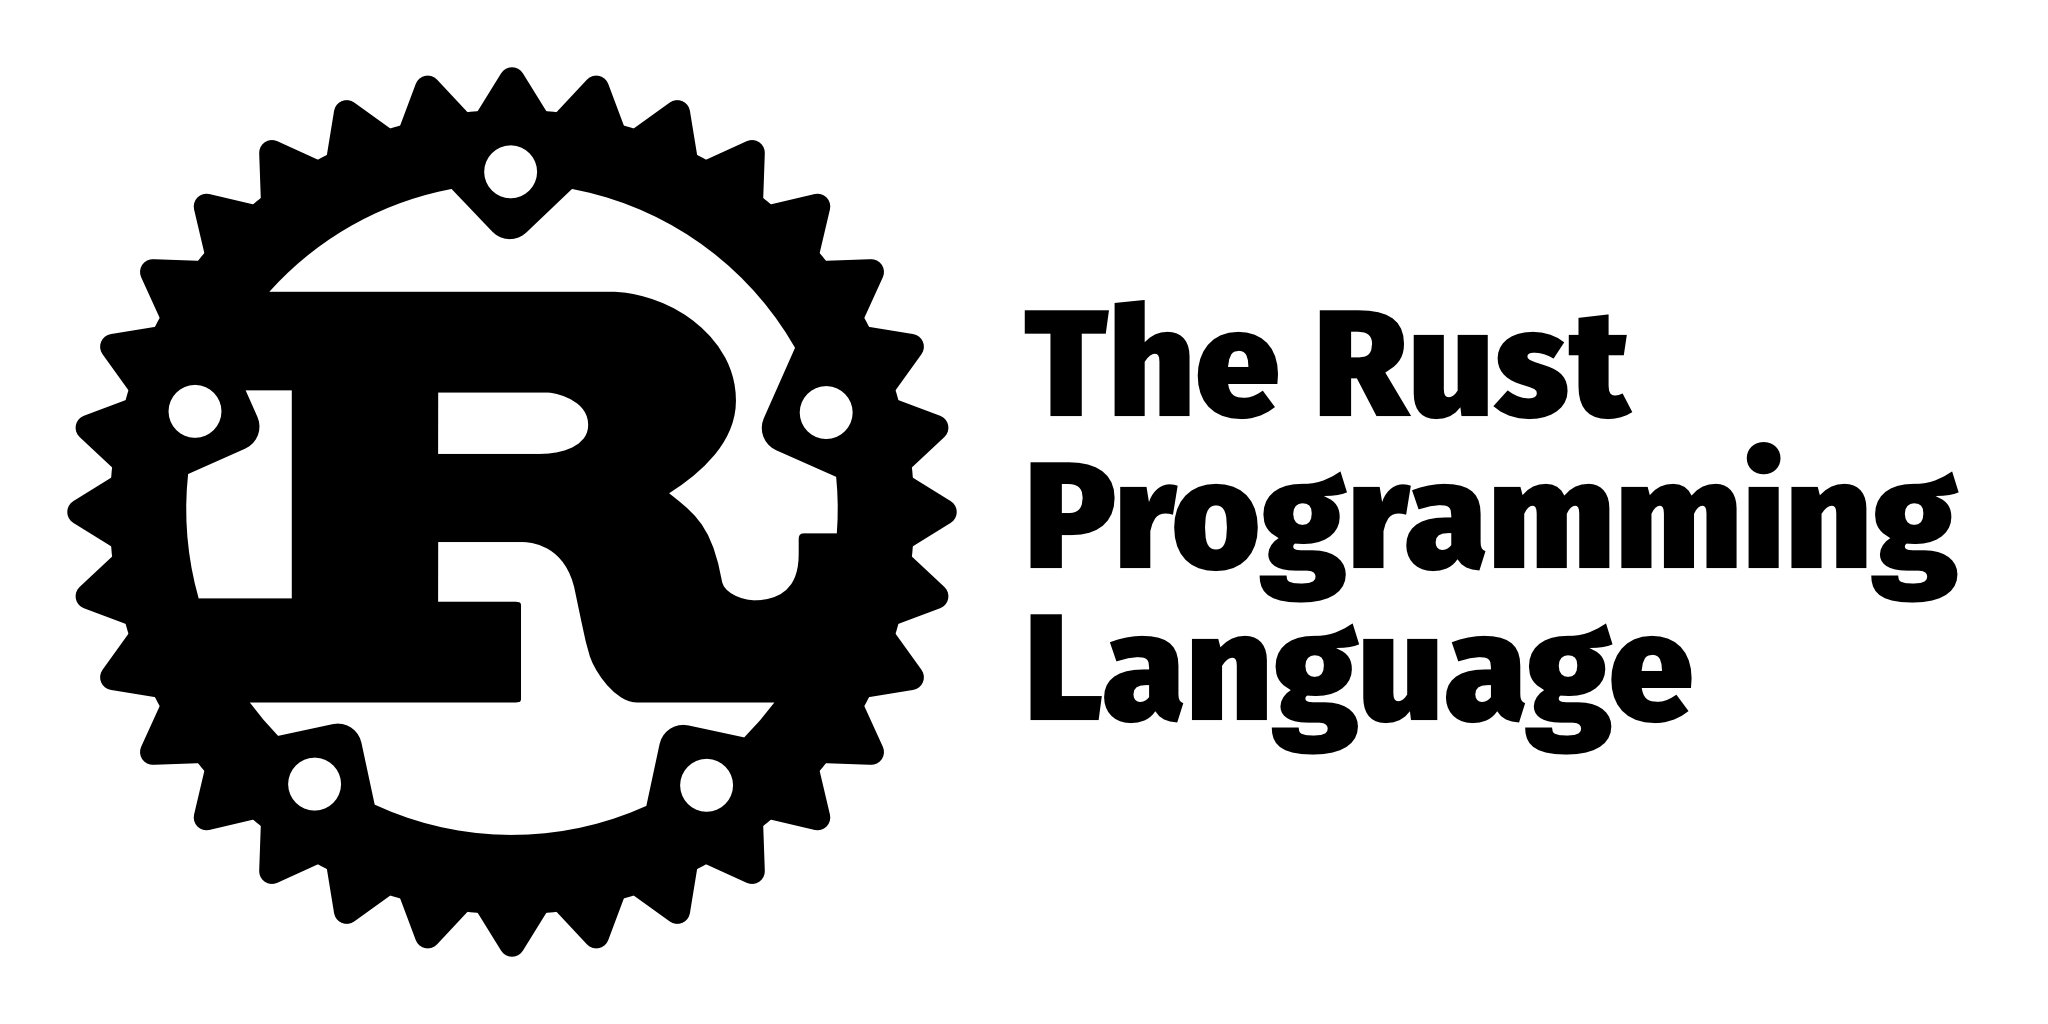 Image depicting the Rust Programming Language logo